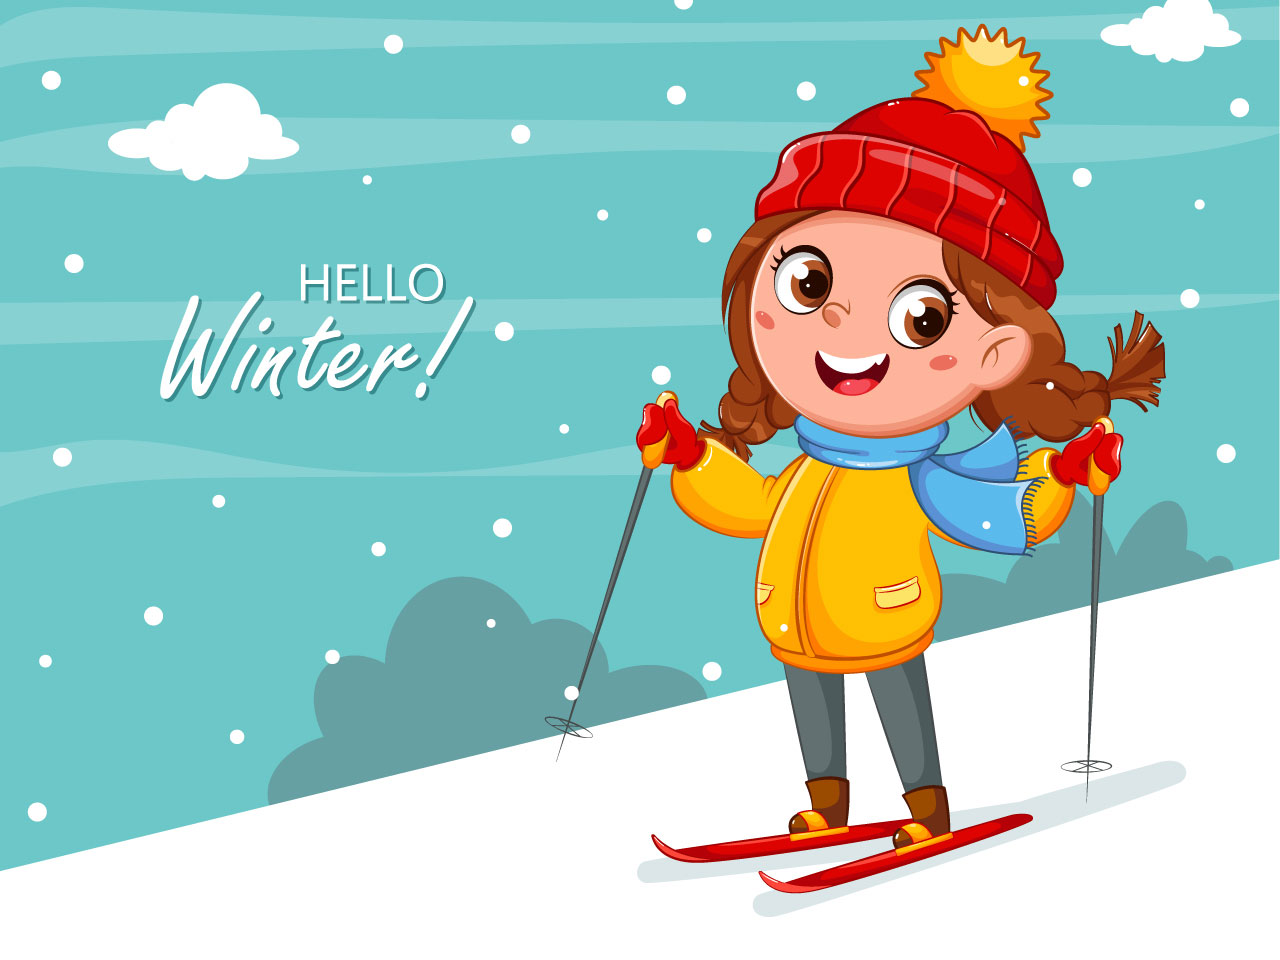 Hi clipart kid skiing cute skier girl cartoon character winter sport hello winter concept cartoon illustration image